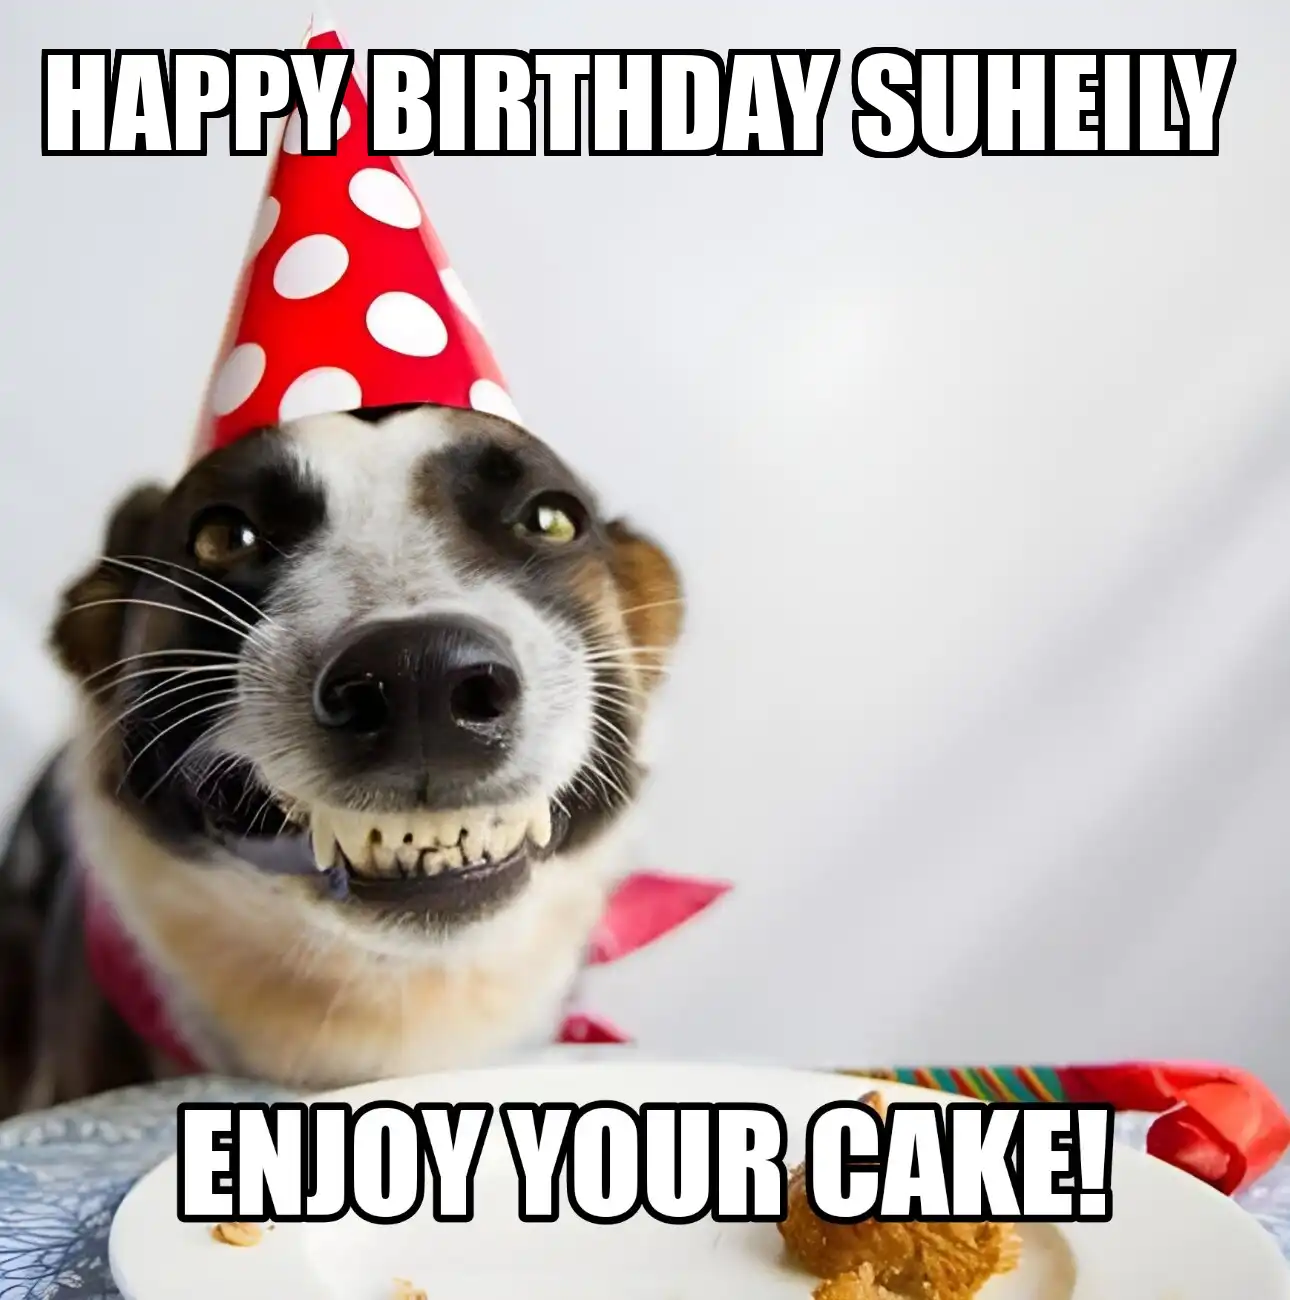 Happy Birthday Suheily Enjoy Your Cake Dog Meme